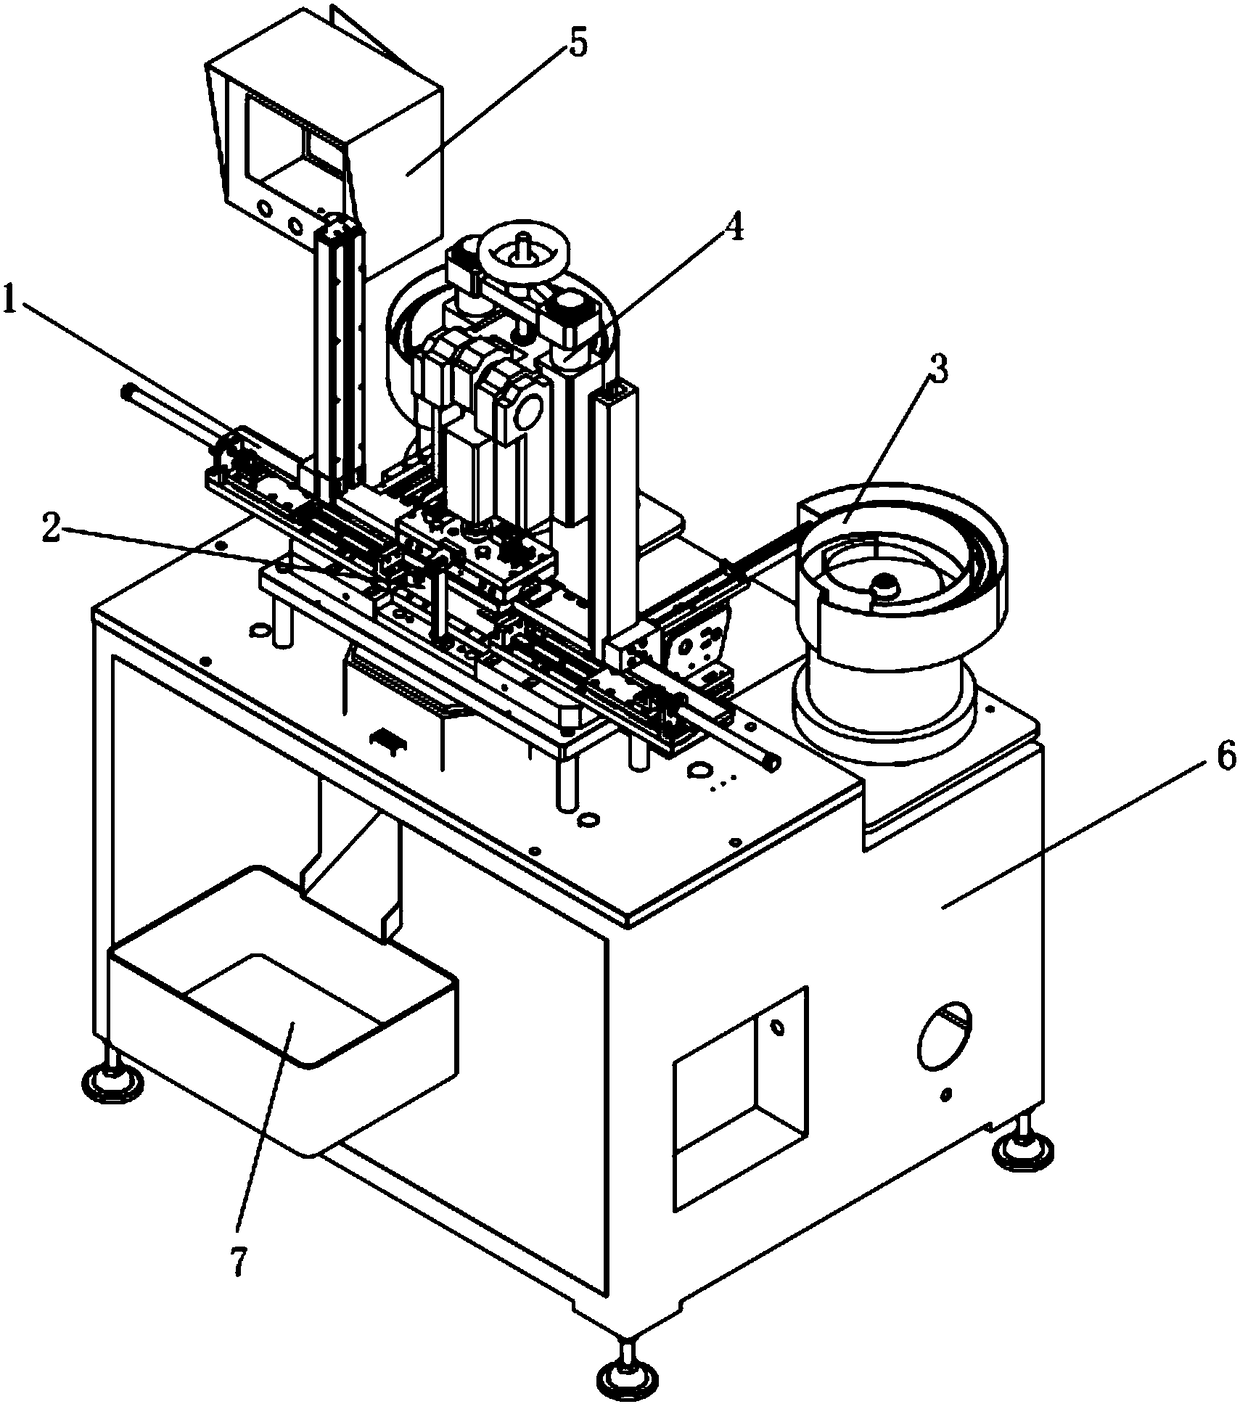 A resistor sheet riveting press